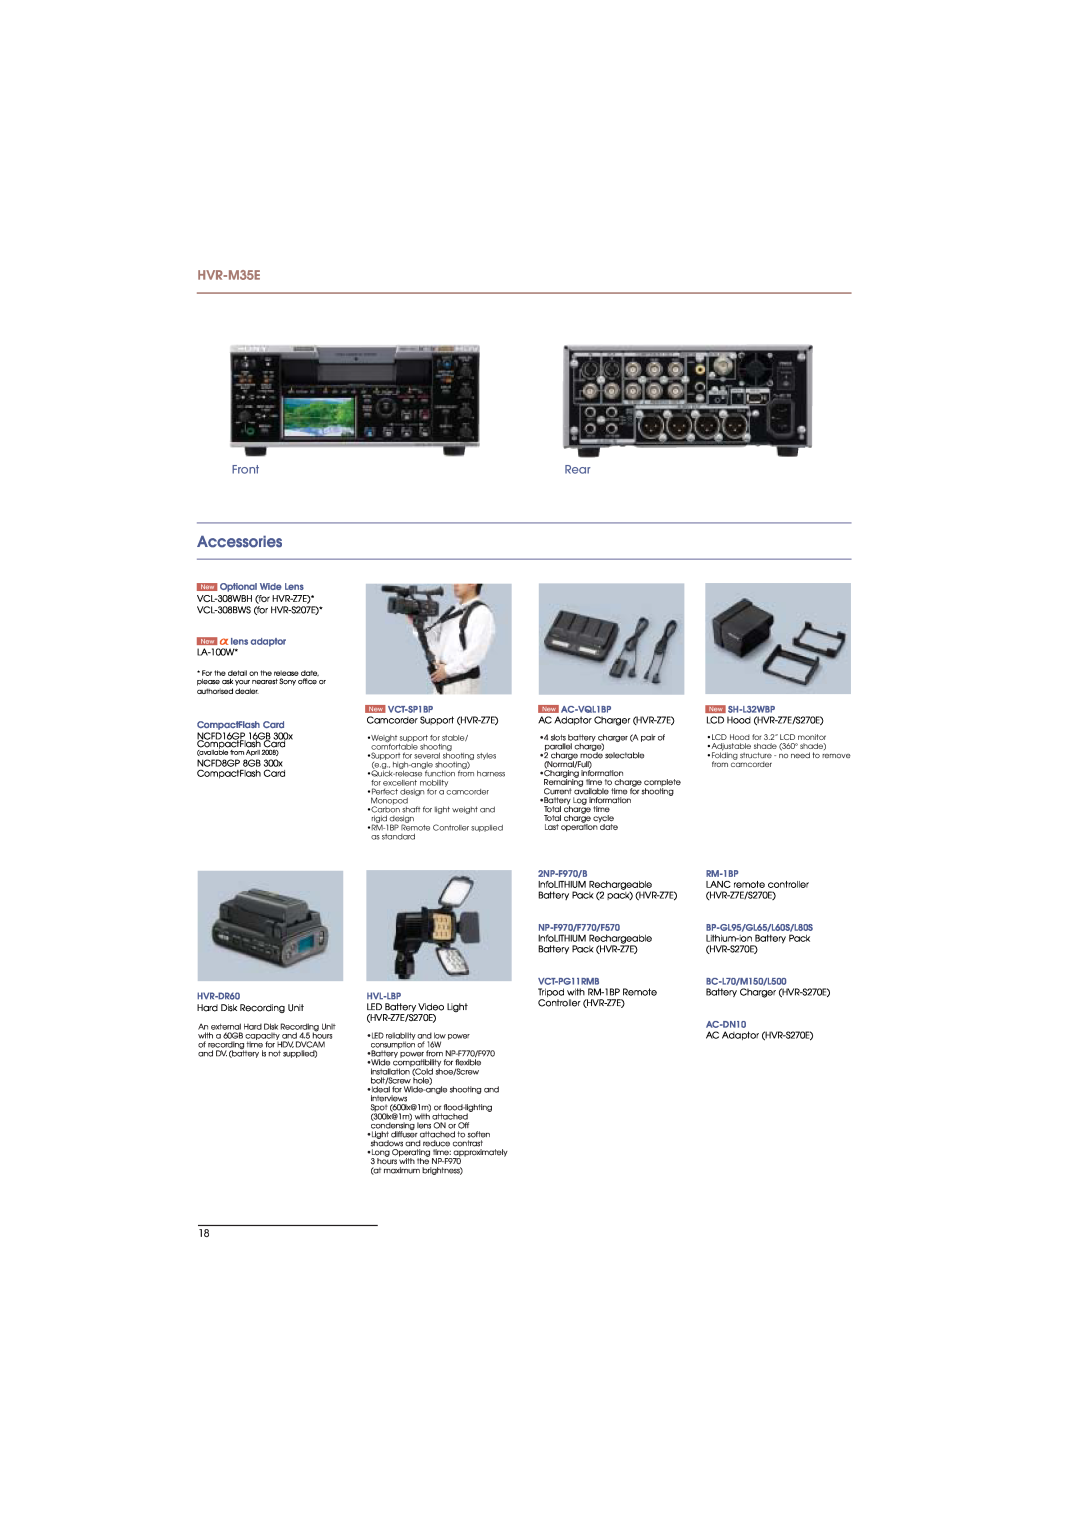 Sony HVR-Z7E, HVR-S270E manual Accessories, HVR-M35E, Front, Rear 